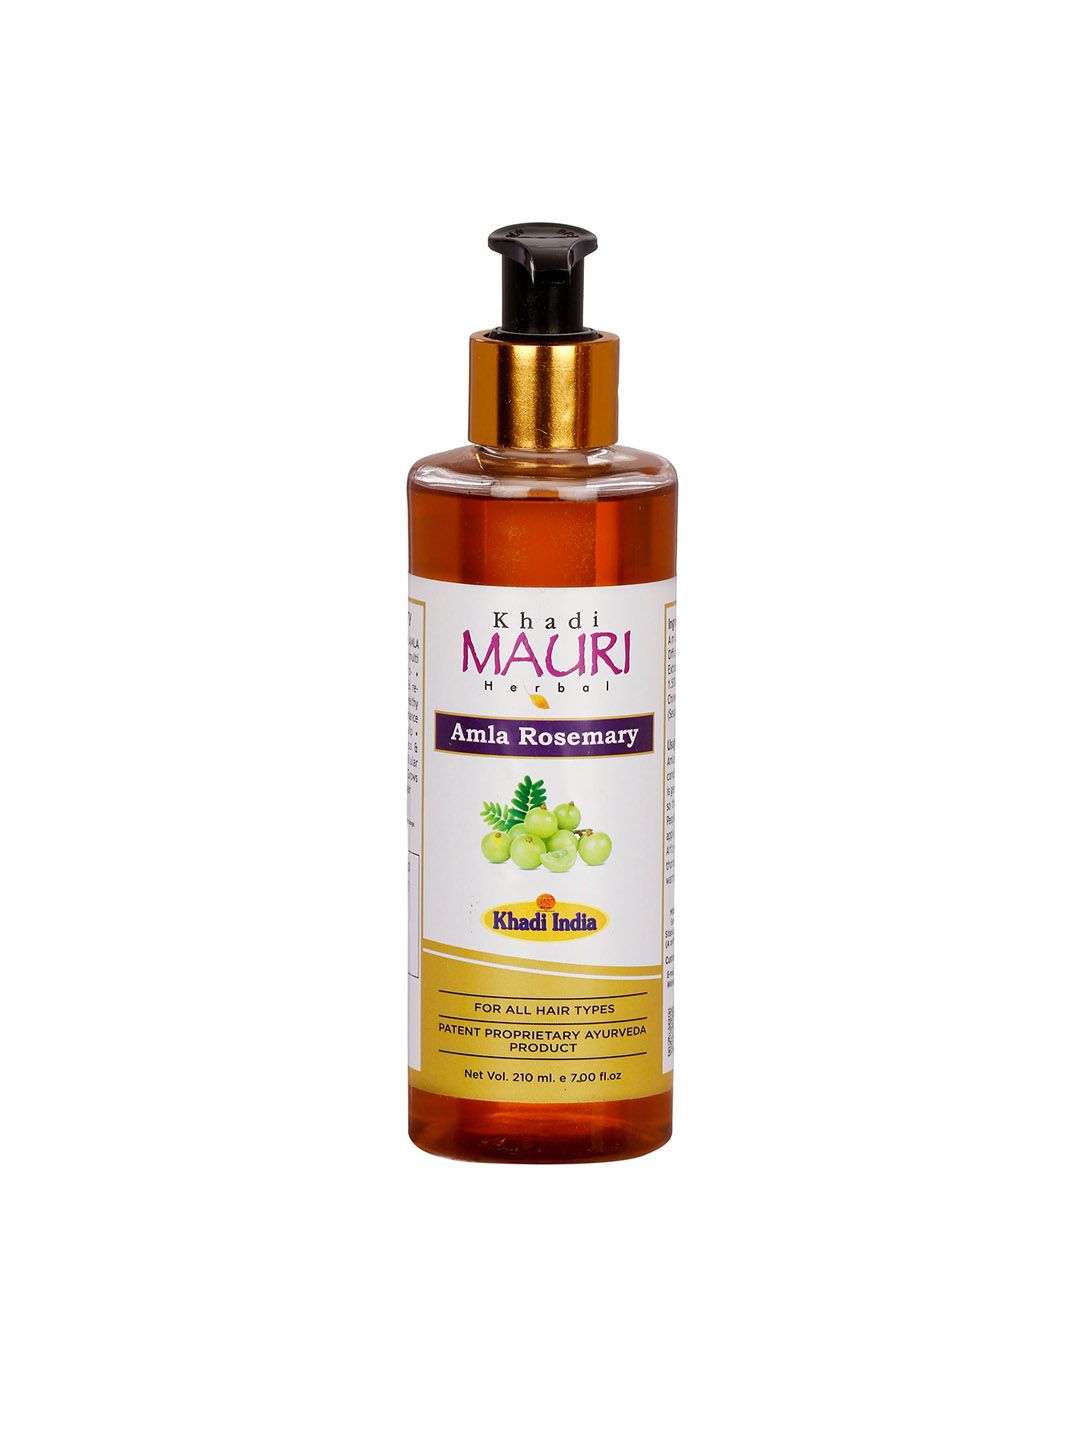 Khadi Mauri Herbal Amla Rosemary Shampoo with Jojoba Oil - 210 ml Price in India